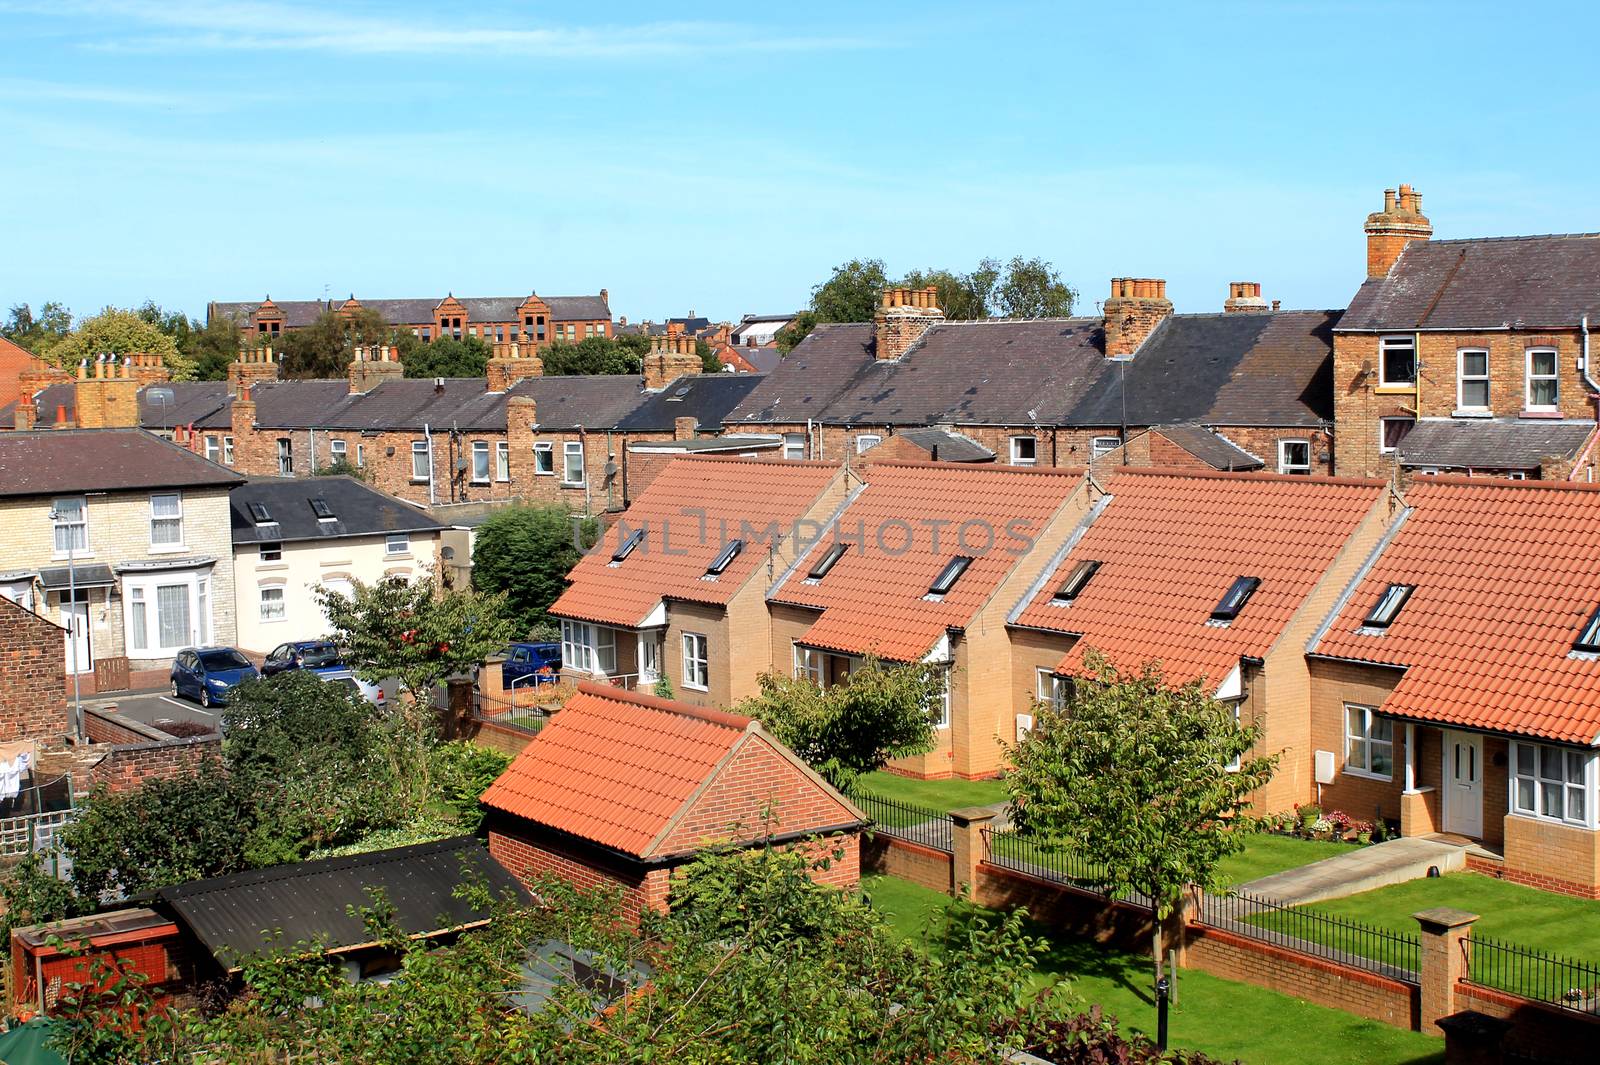 Modern housing estate in Scarborough, England.